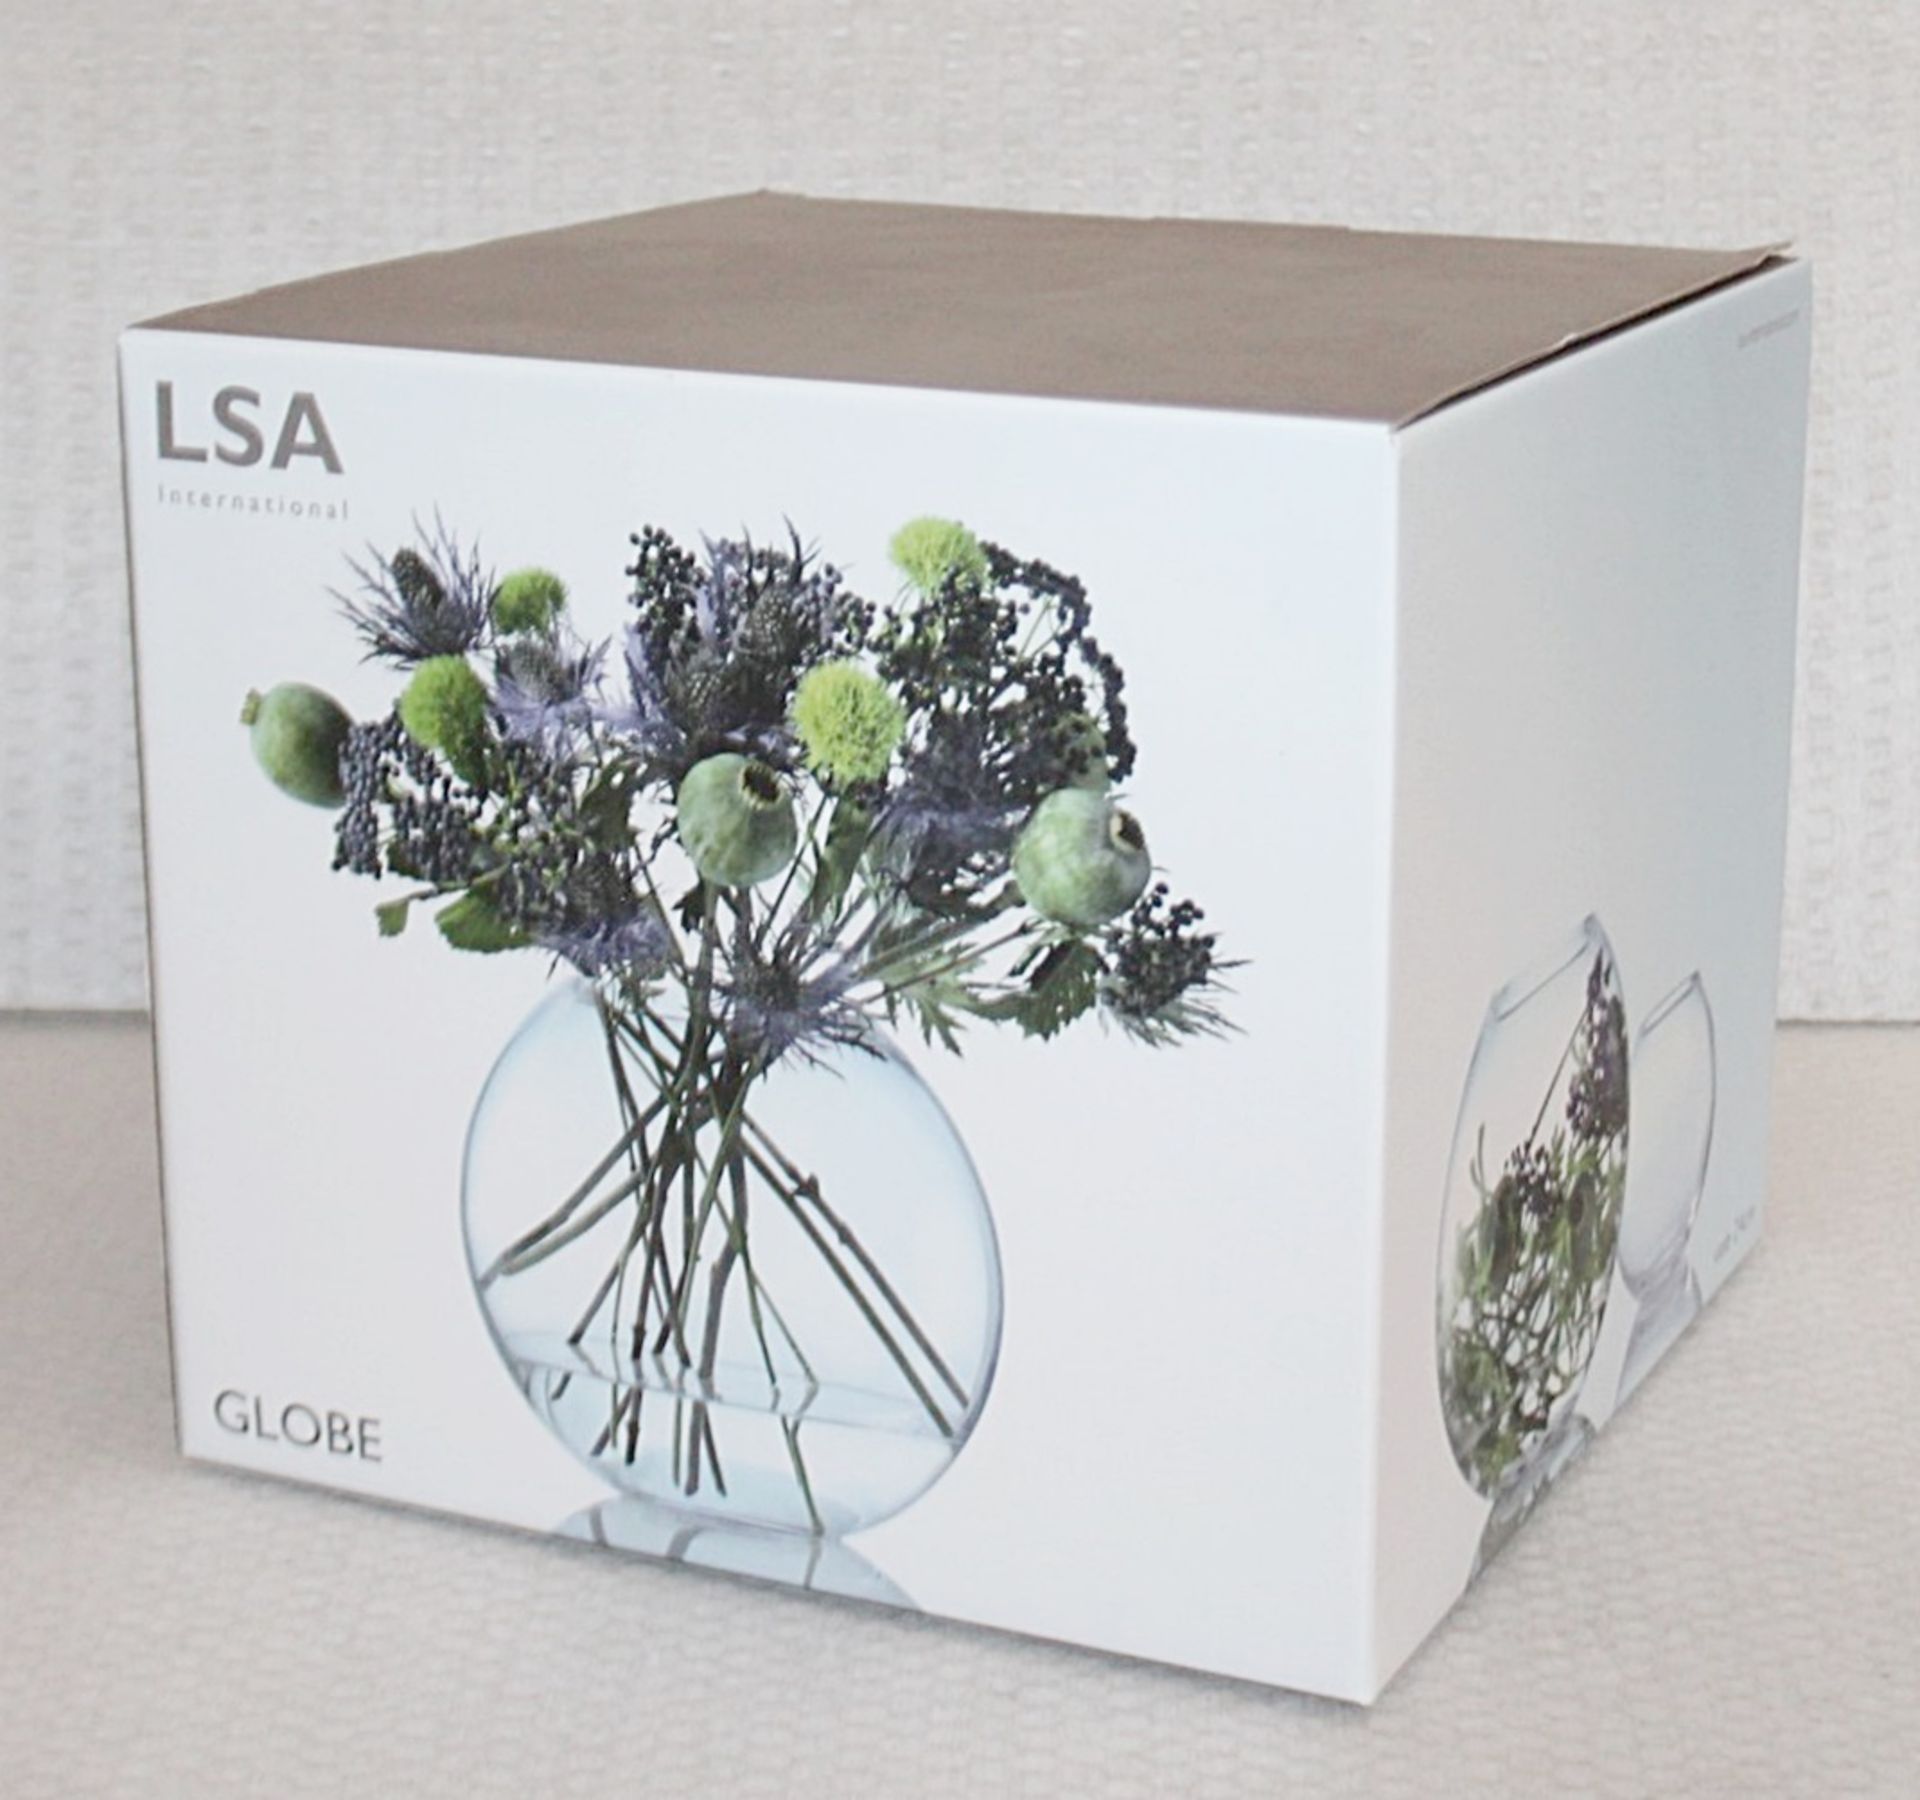 1 x LSA 'Globe' Luxury 24cm Mouthblown Handmade Glass Vase  - Unused Boxed Stock - Image 2 of 9